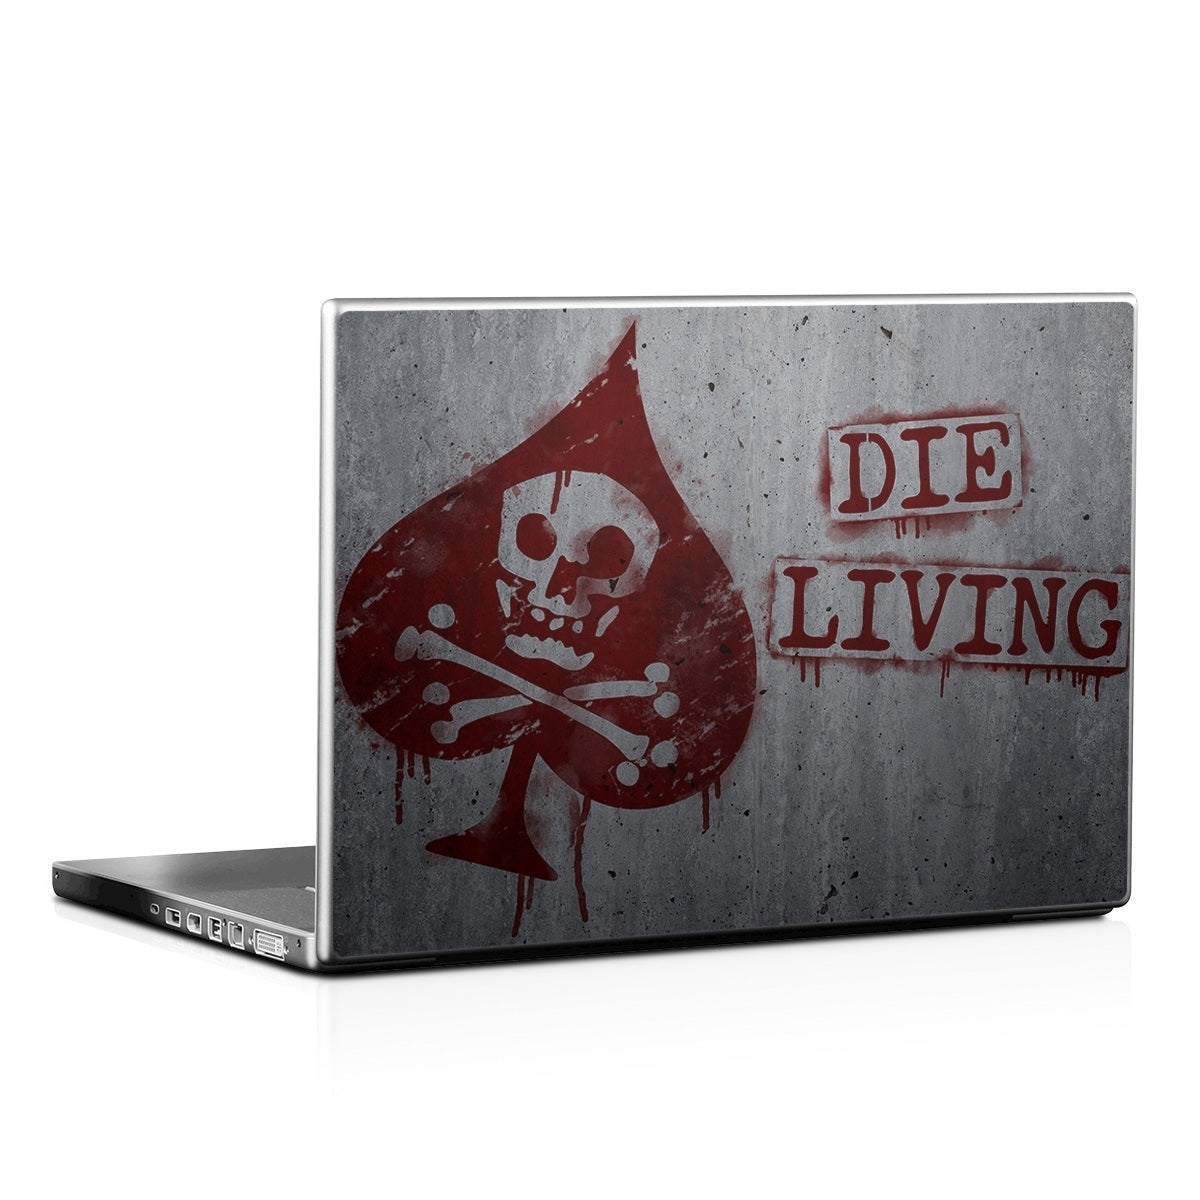 SOFLETE Die Living Bomber - Laptop Lid Skin